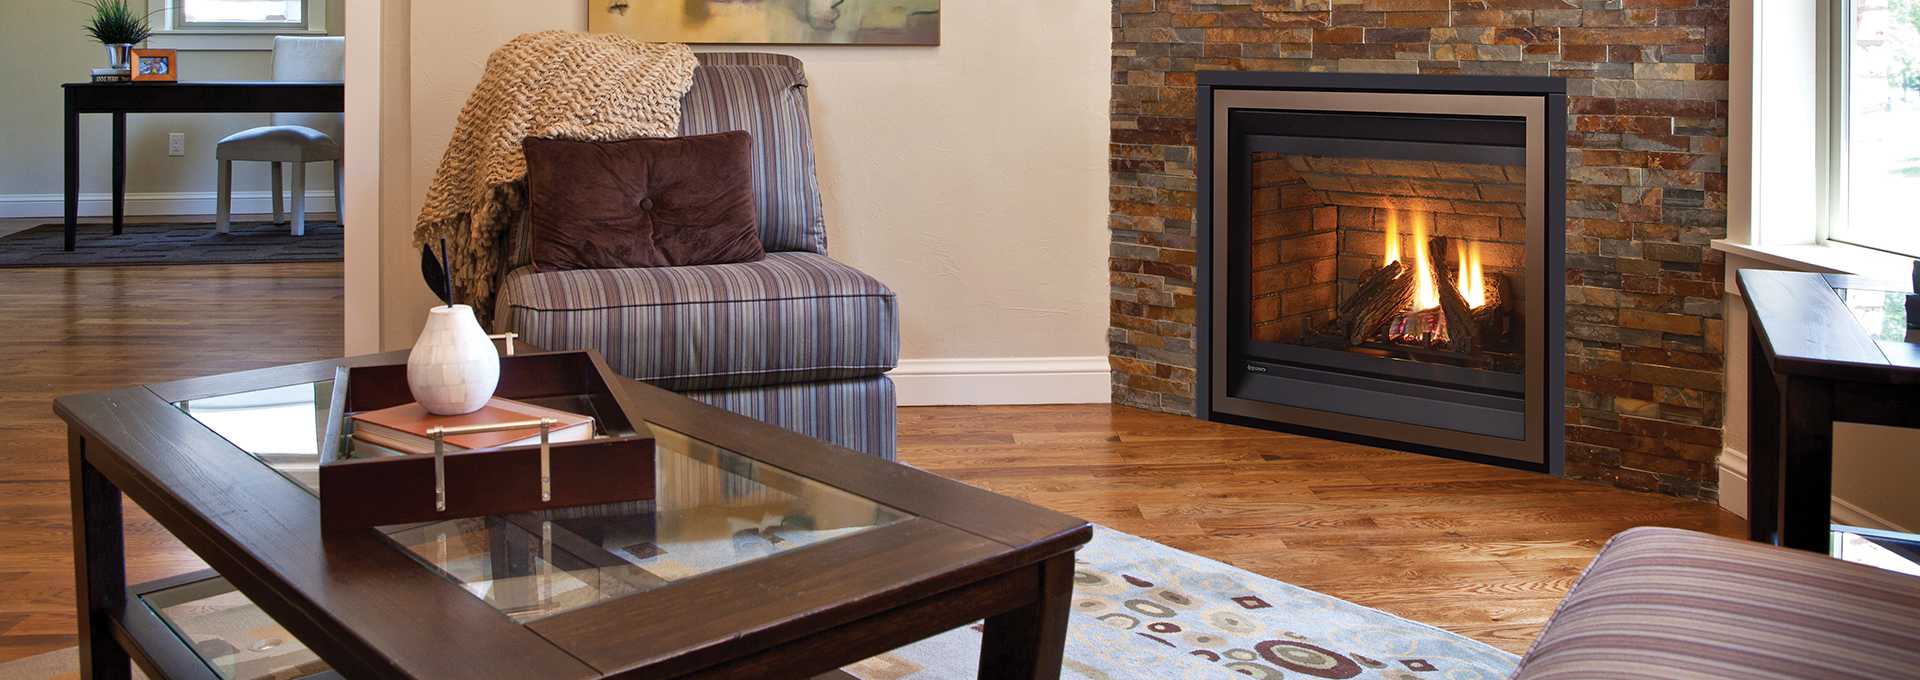 Country Comfort Fireplace Insert Luxury Fireplaces toronto Fireplace Repair & Maintenance